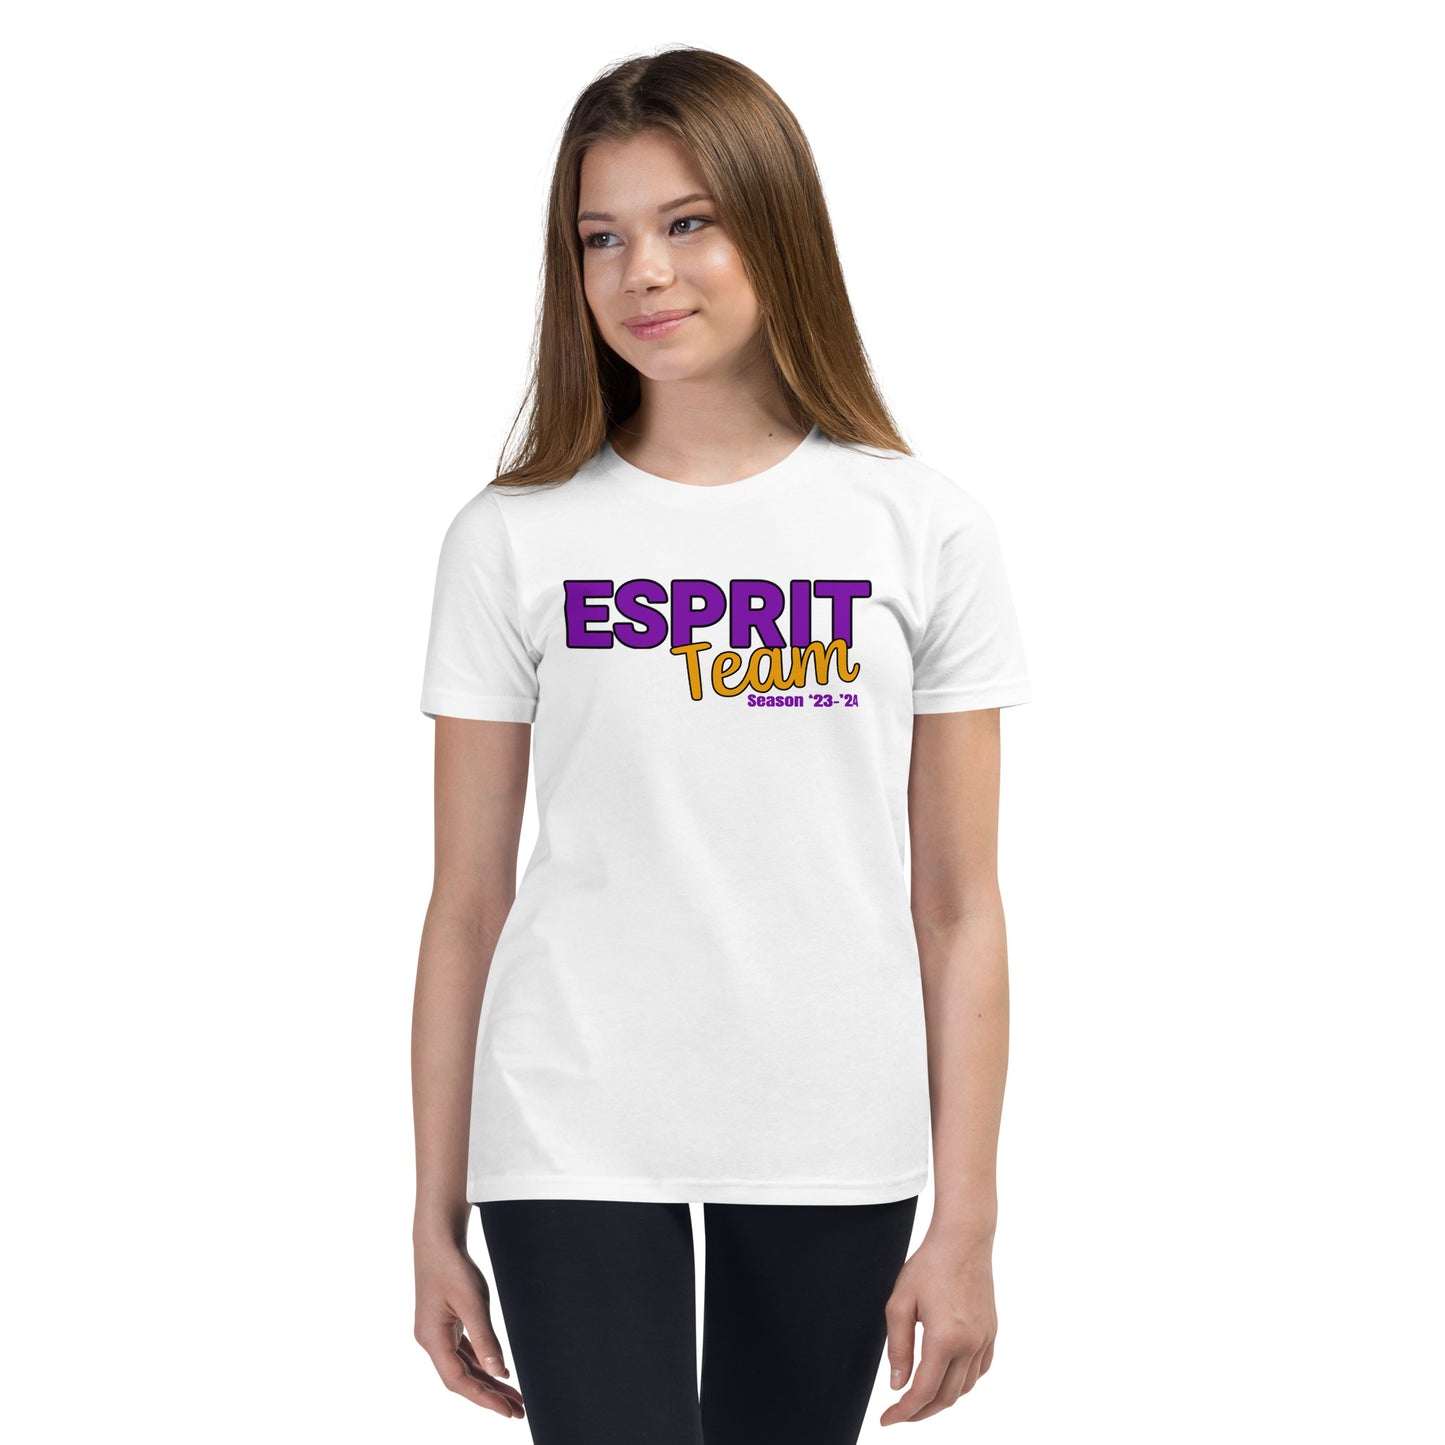 Esprit Team Season 23'-24' Youth T-Shirt